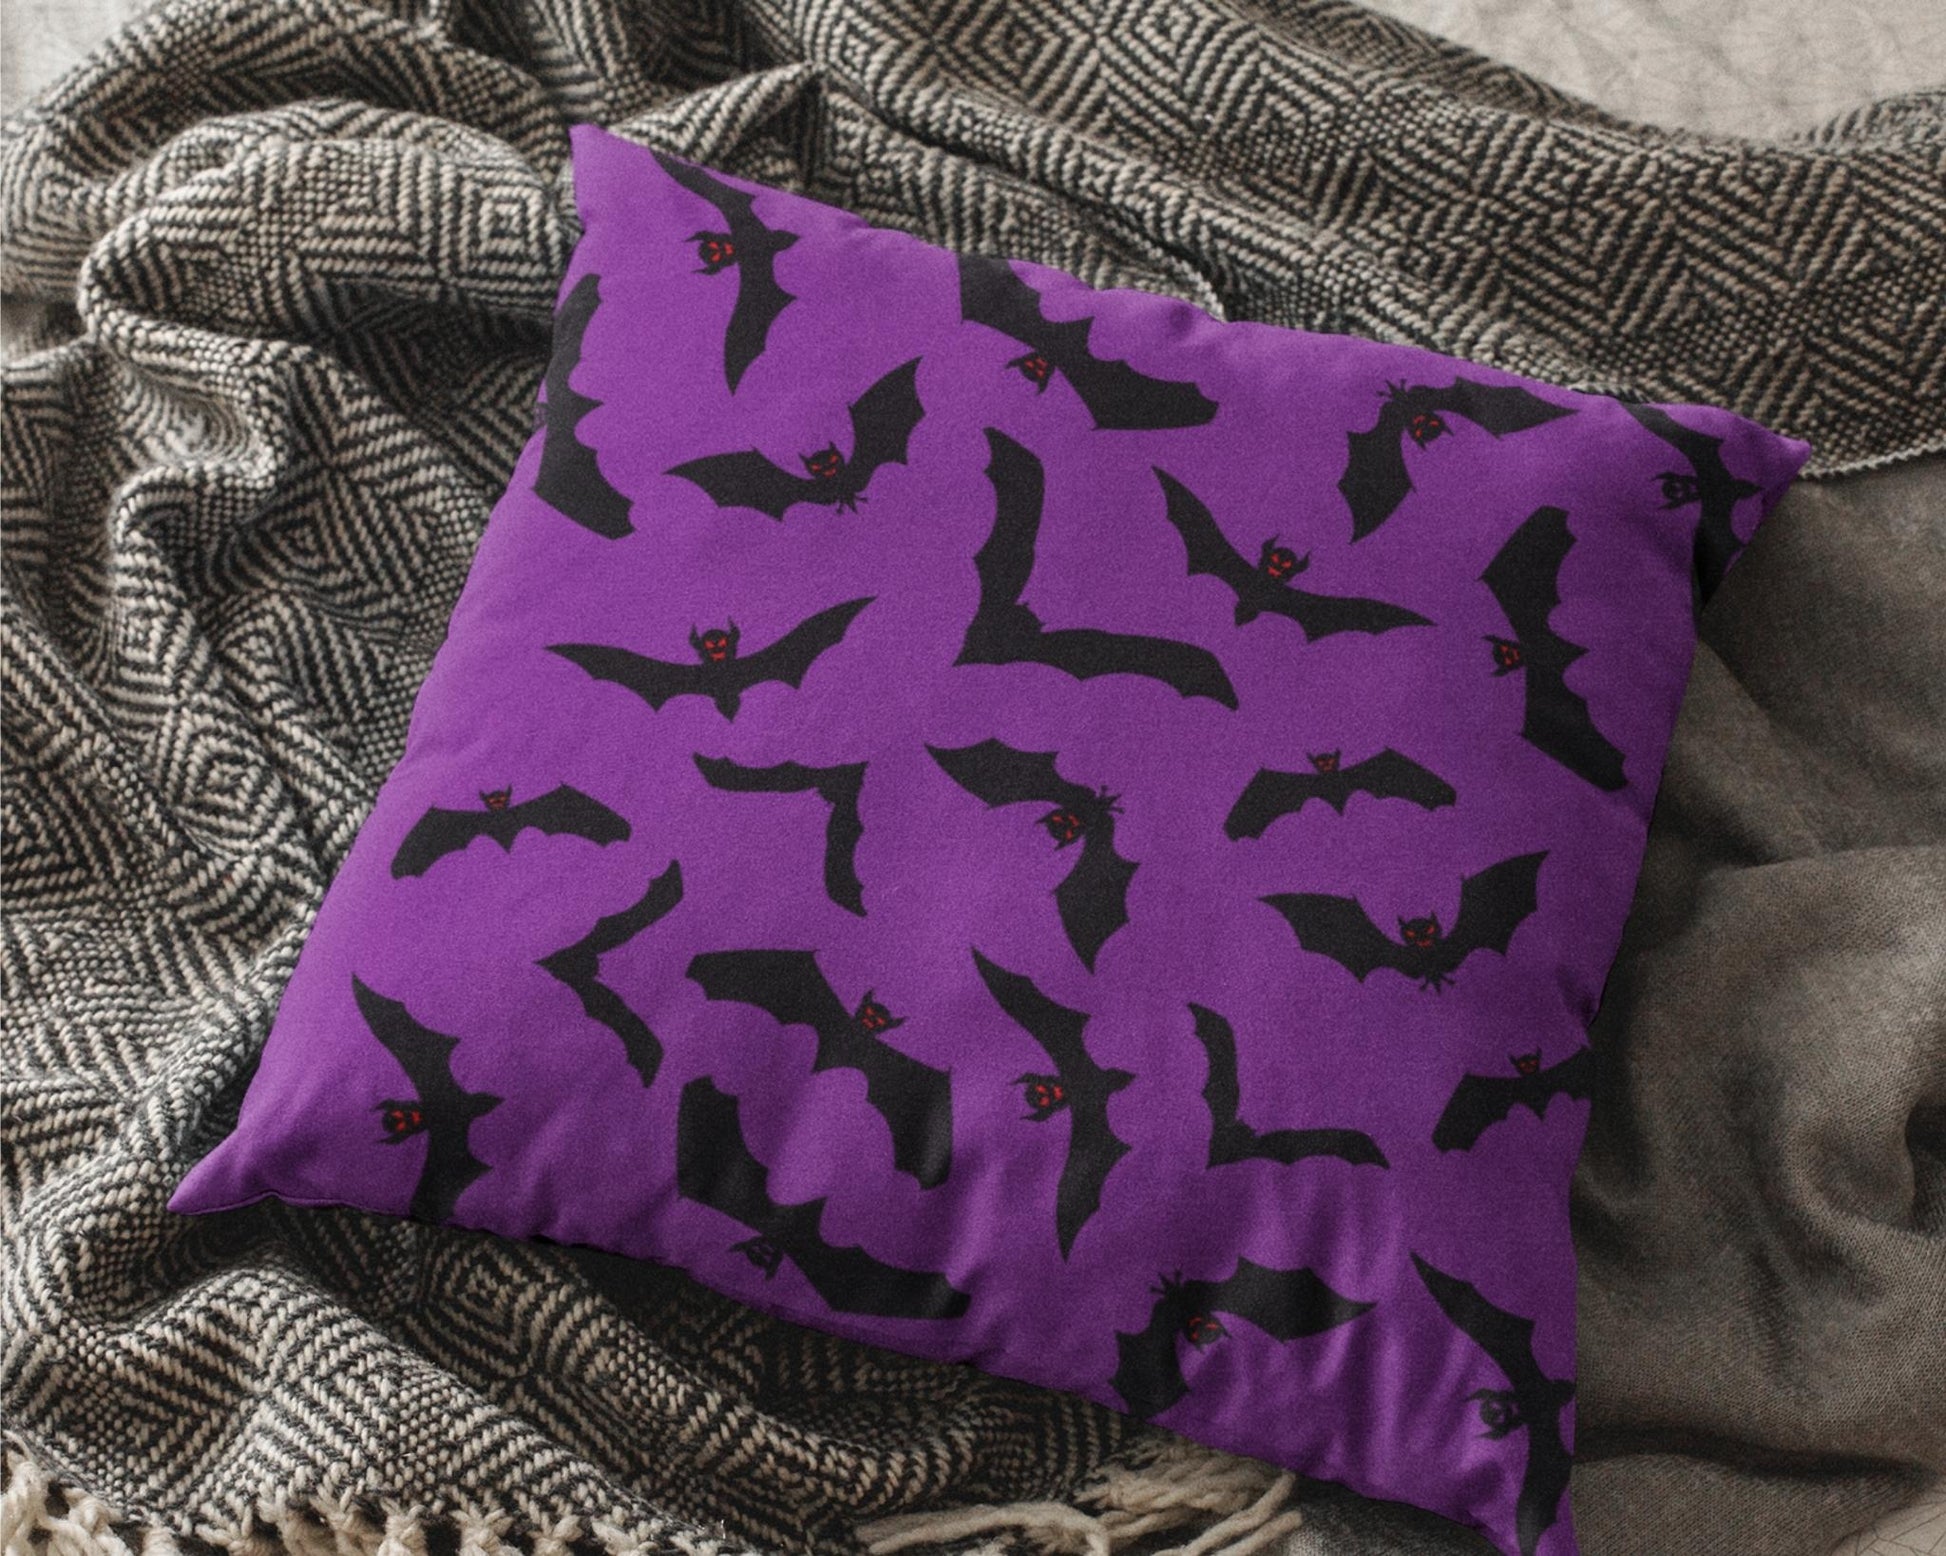 Bat Pattern Purple Halloween Gothic Throw Pillow